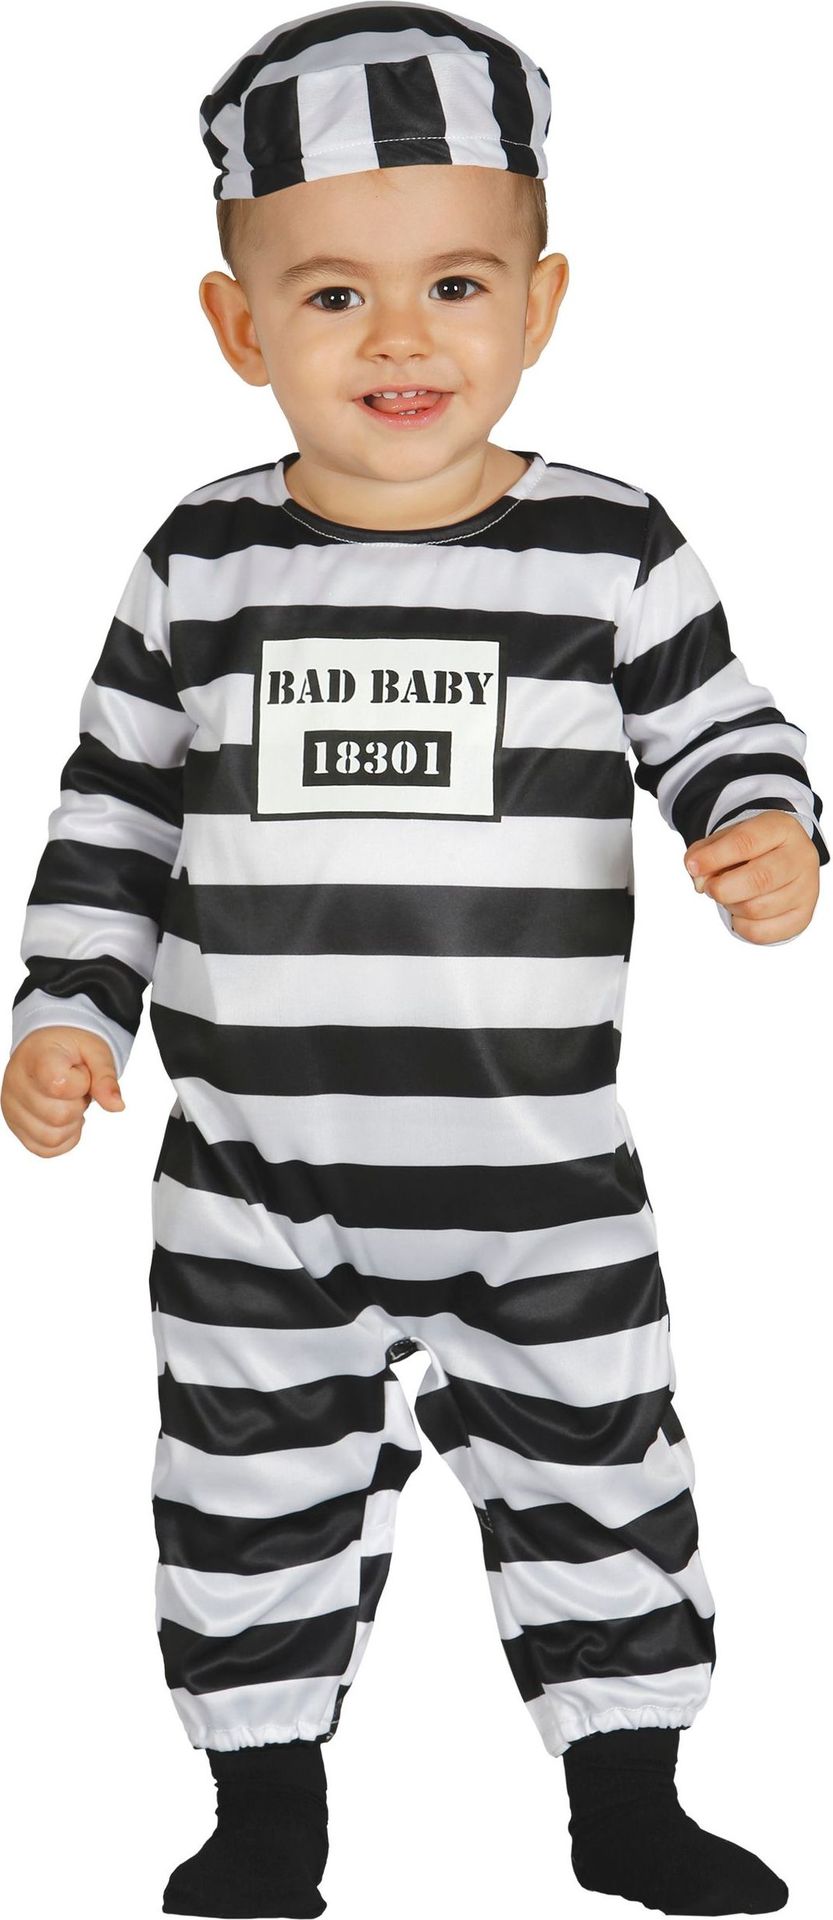 Bad Baby jumpsuit